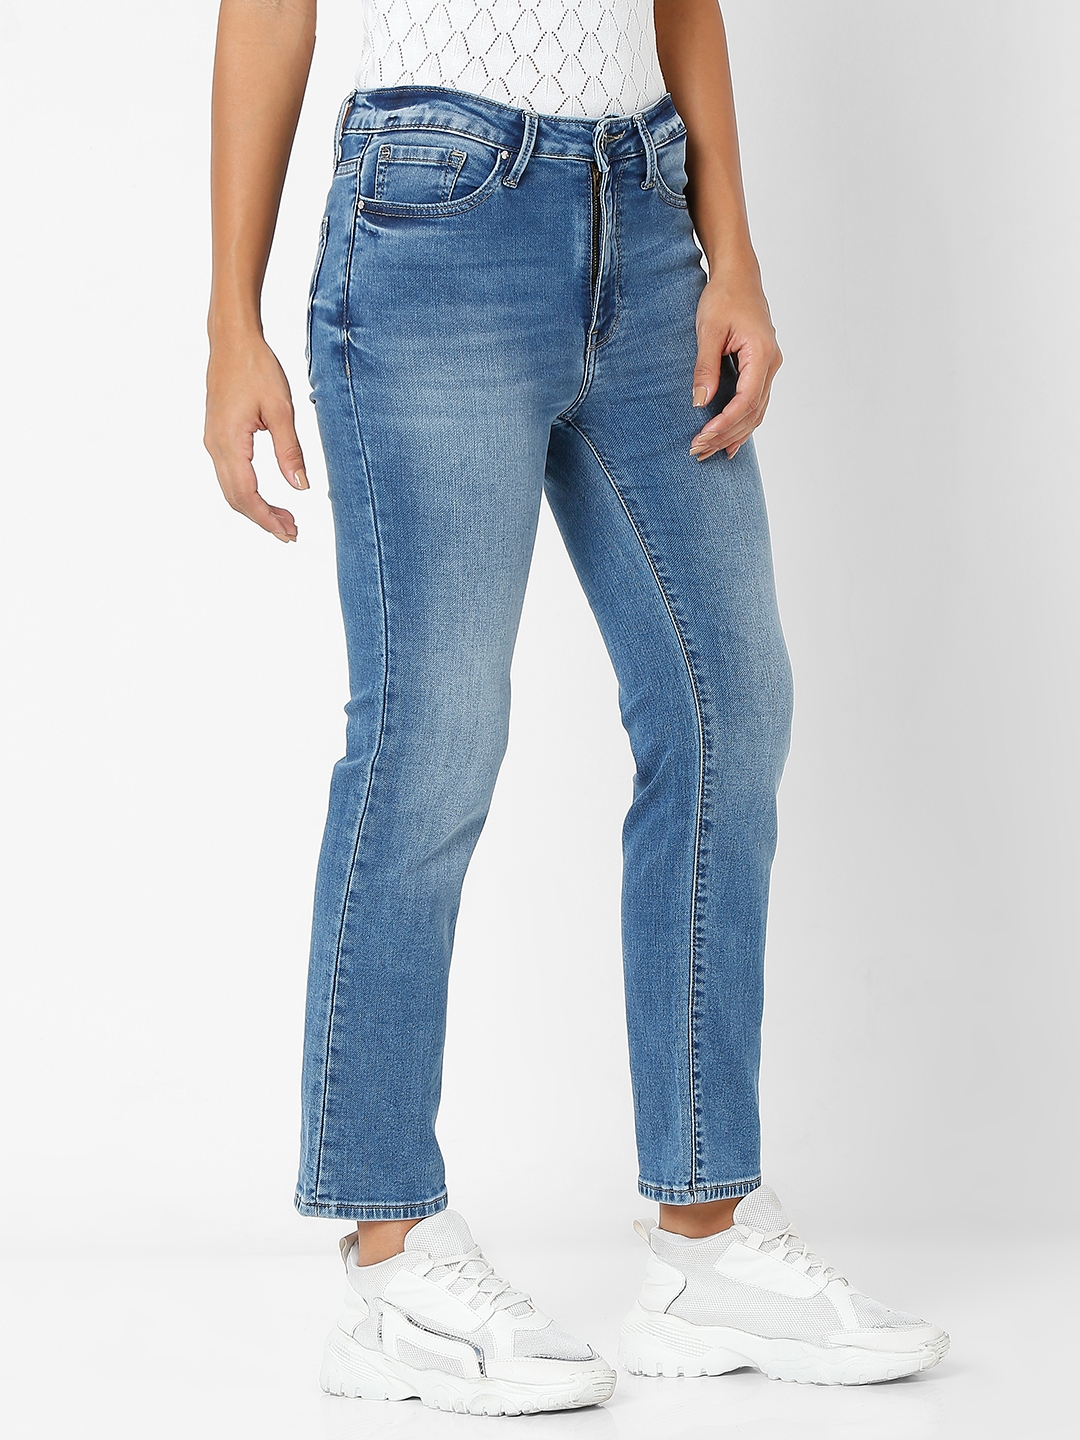 spykar | Women's Blue Cotton Solid Slim Jeans 2